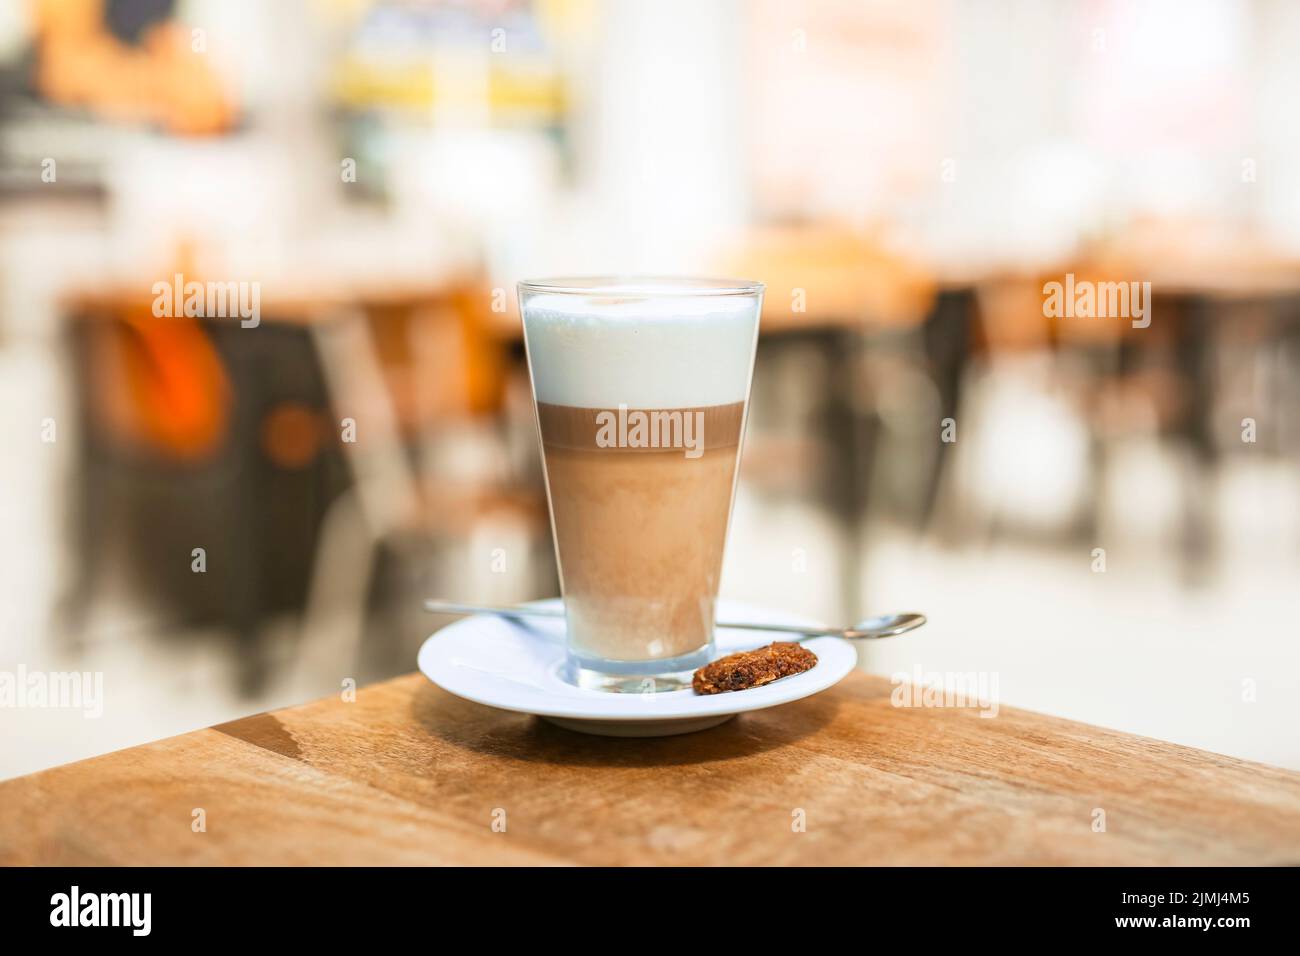 https://c8.alamy.com/comp/2JMJ4M5/cappuccino-coffee-glass-with-spoon-wooden-table-2JMJ4M5.jpg